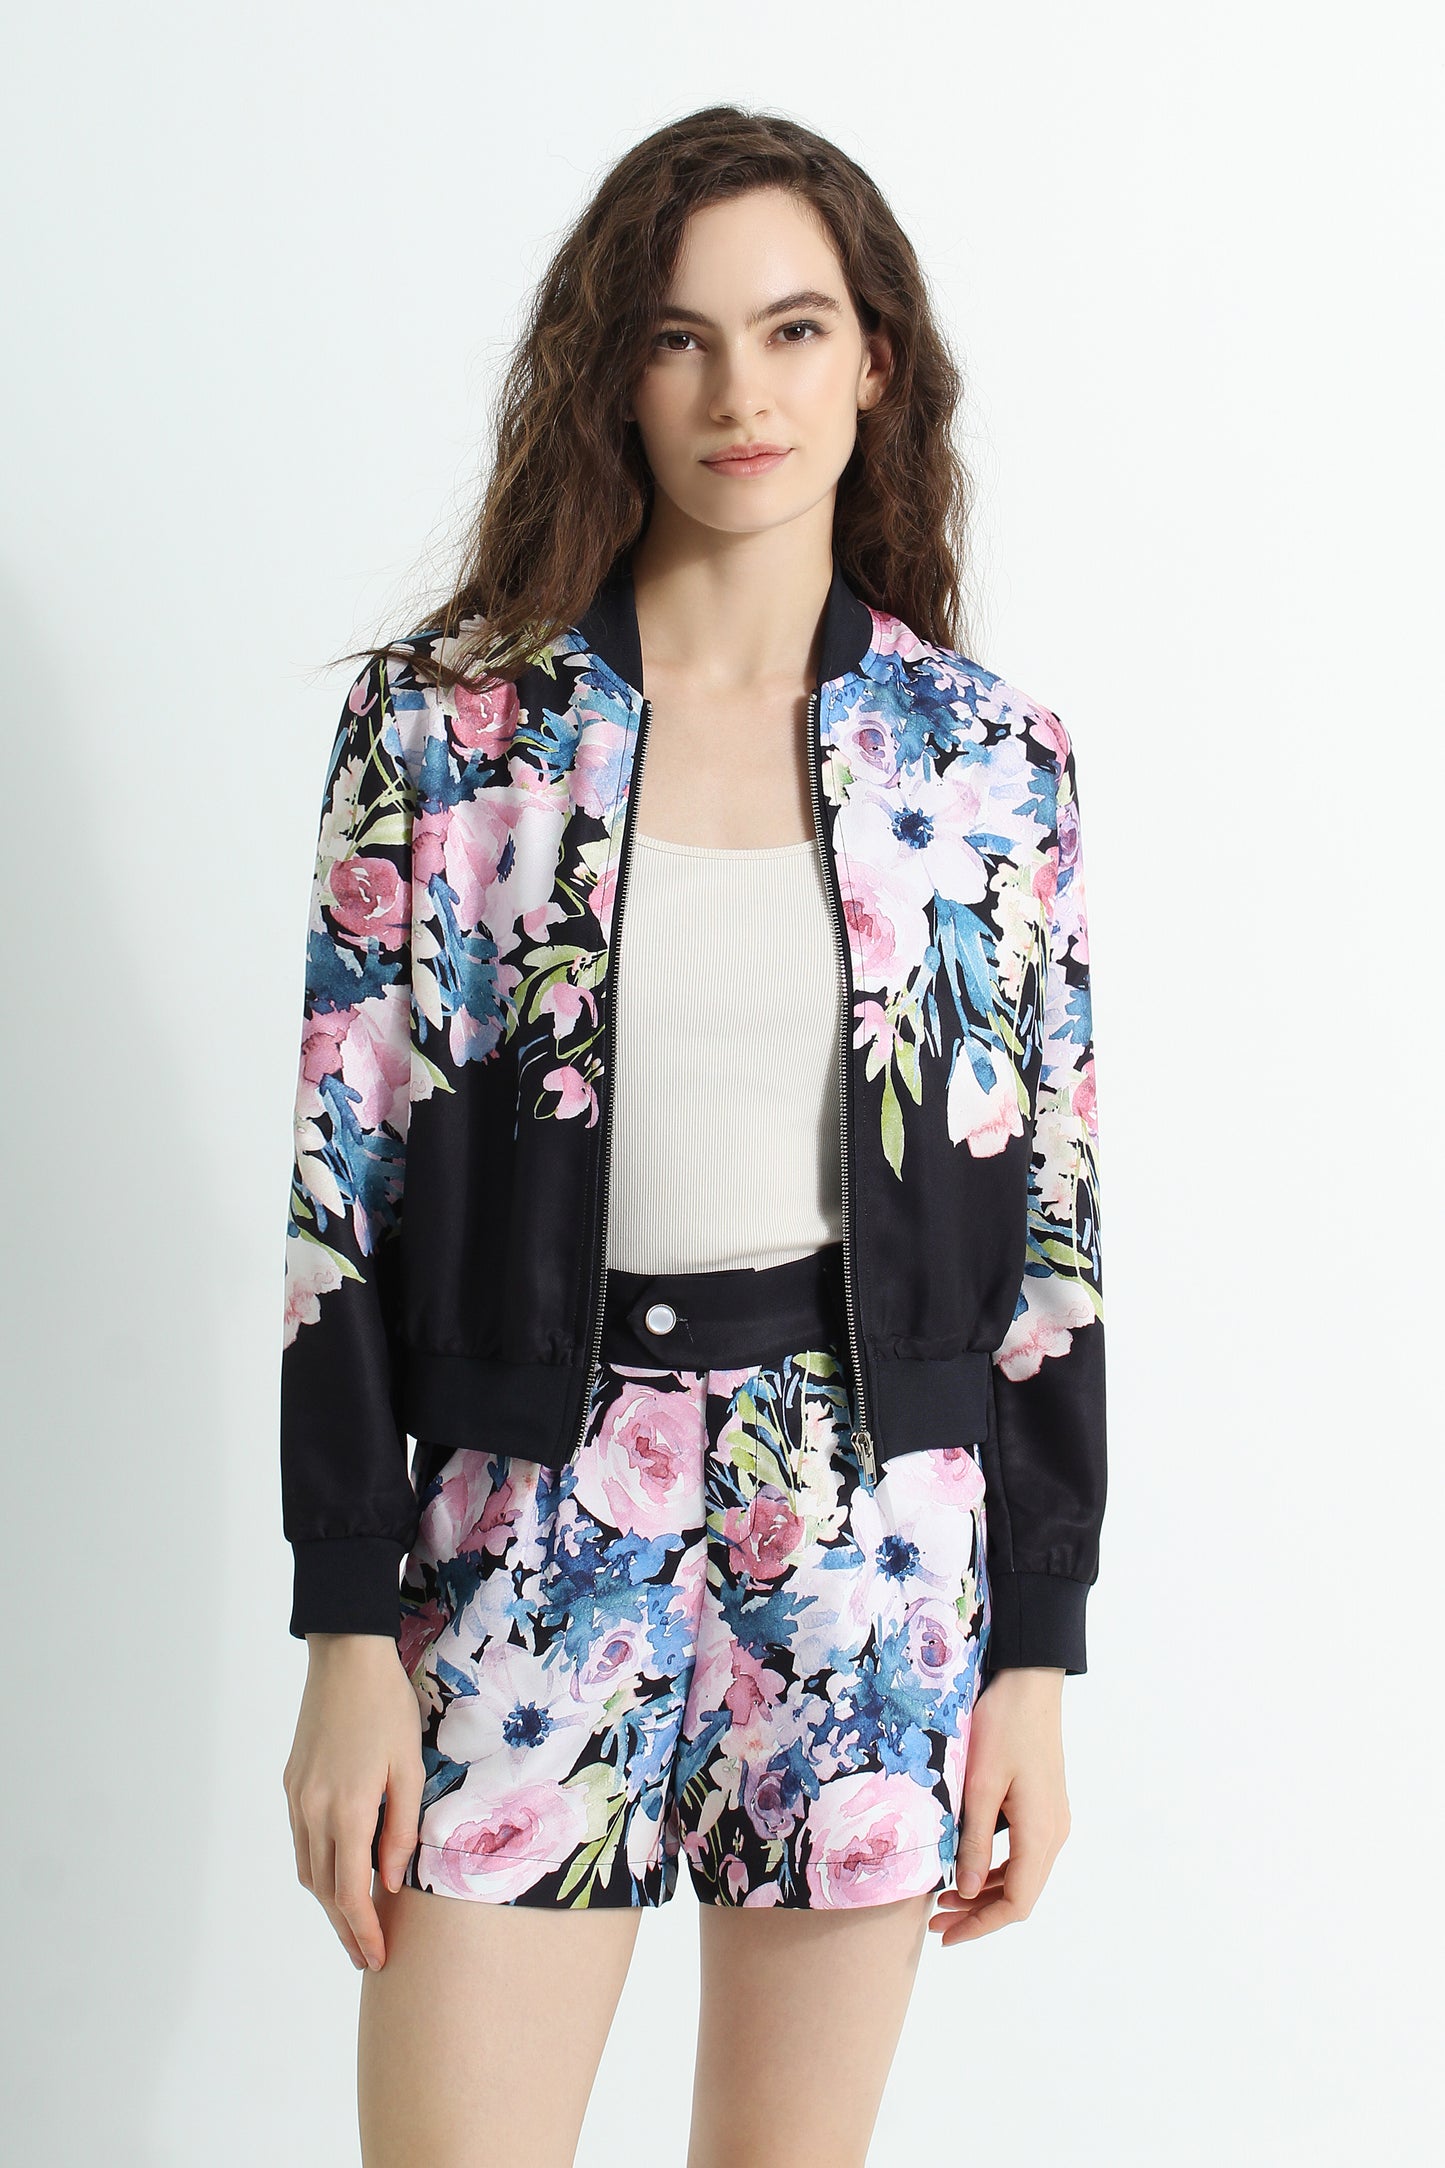 Arien Sporty Set Wear with floral prints